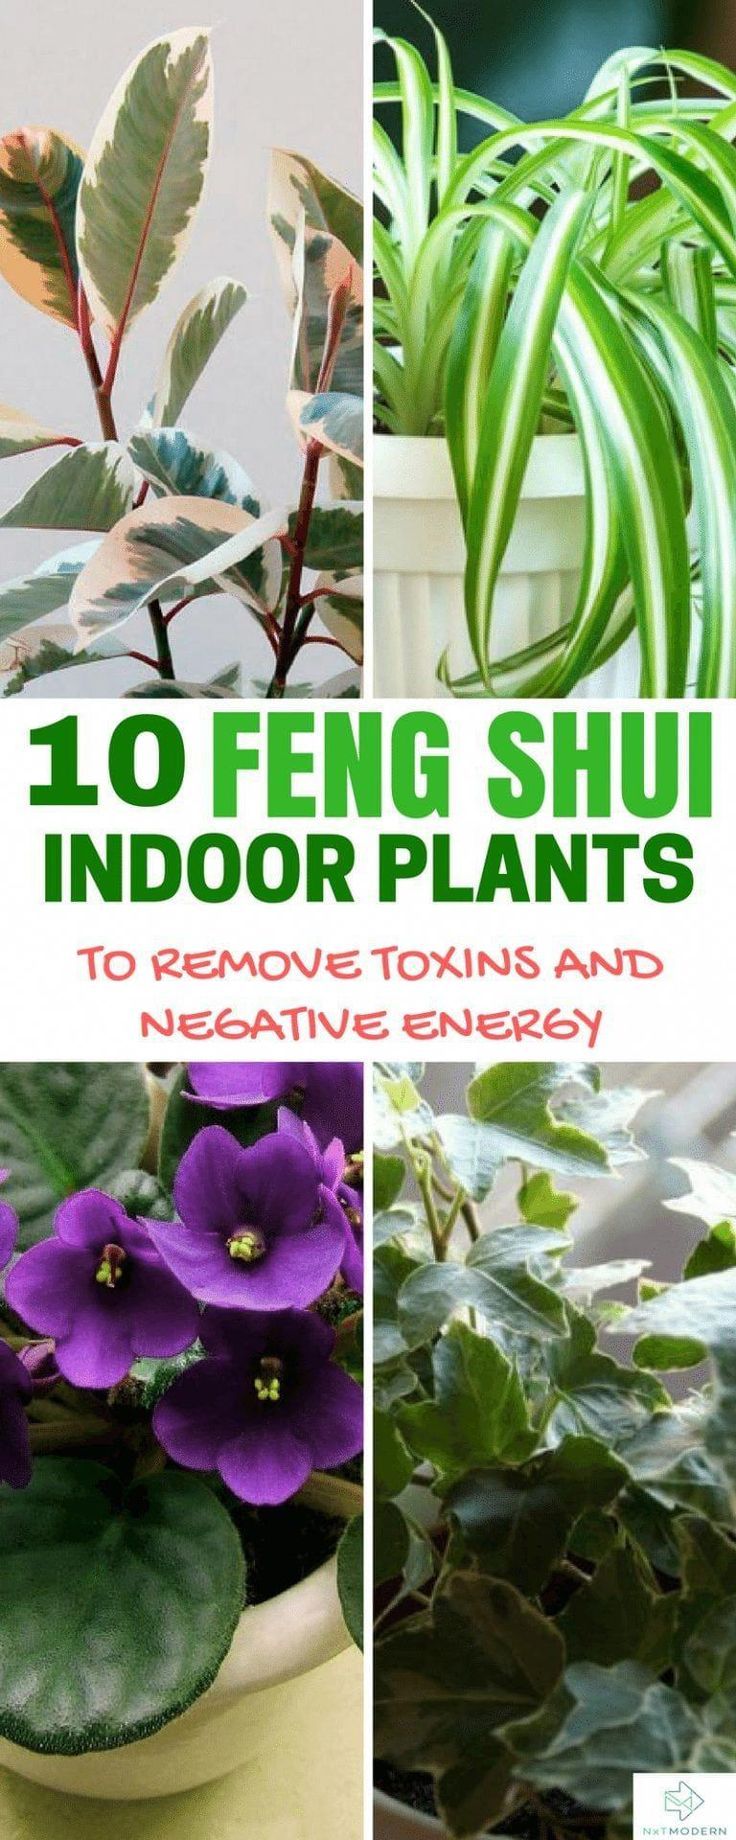 Feng Shui Garten Inspirierend 10 Feng Shui Indoor Plants to Spruce Up Your Interior Decor